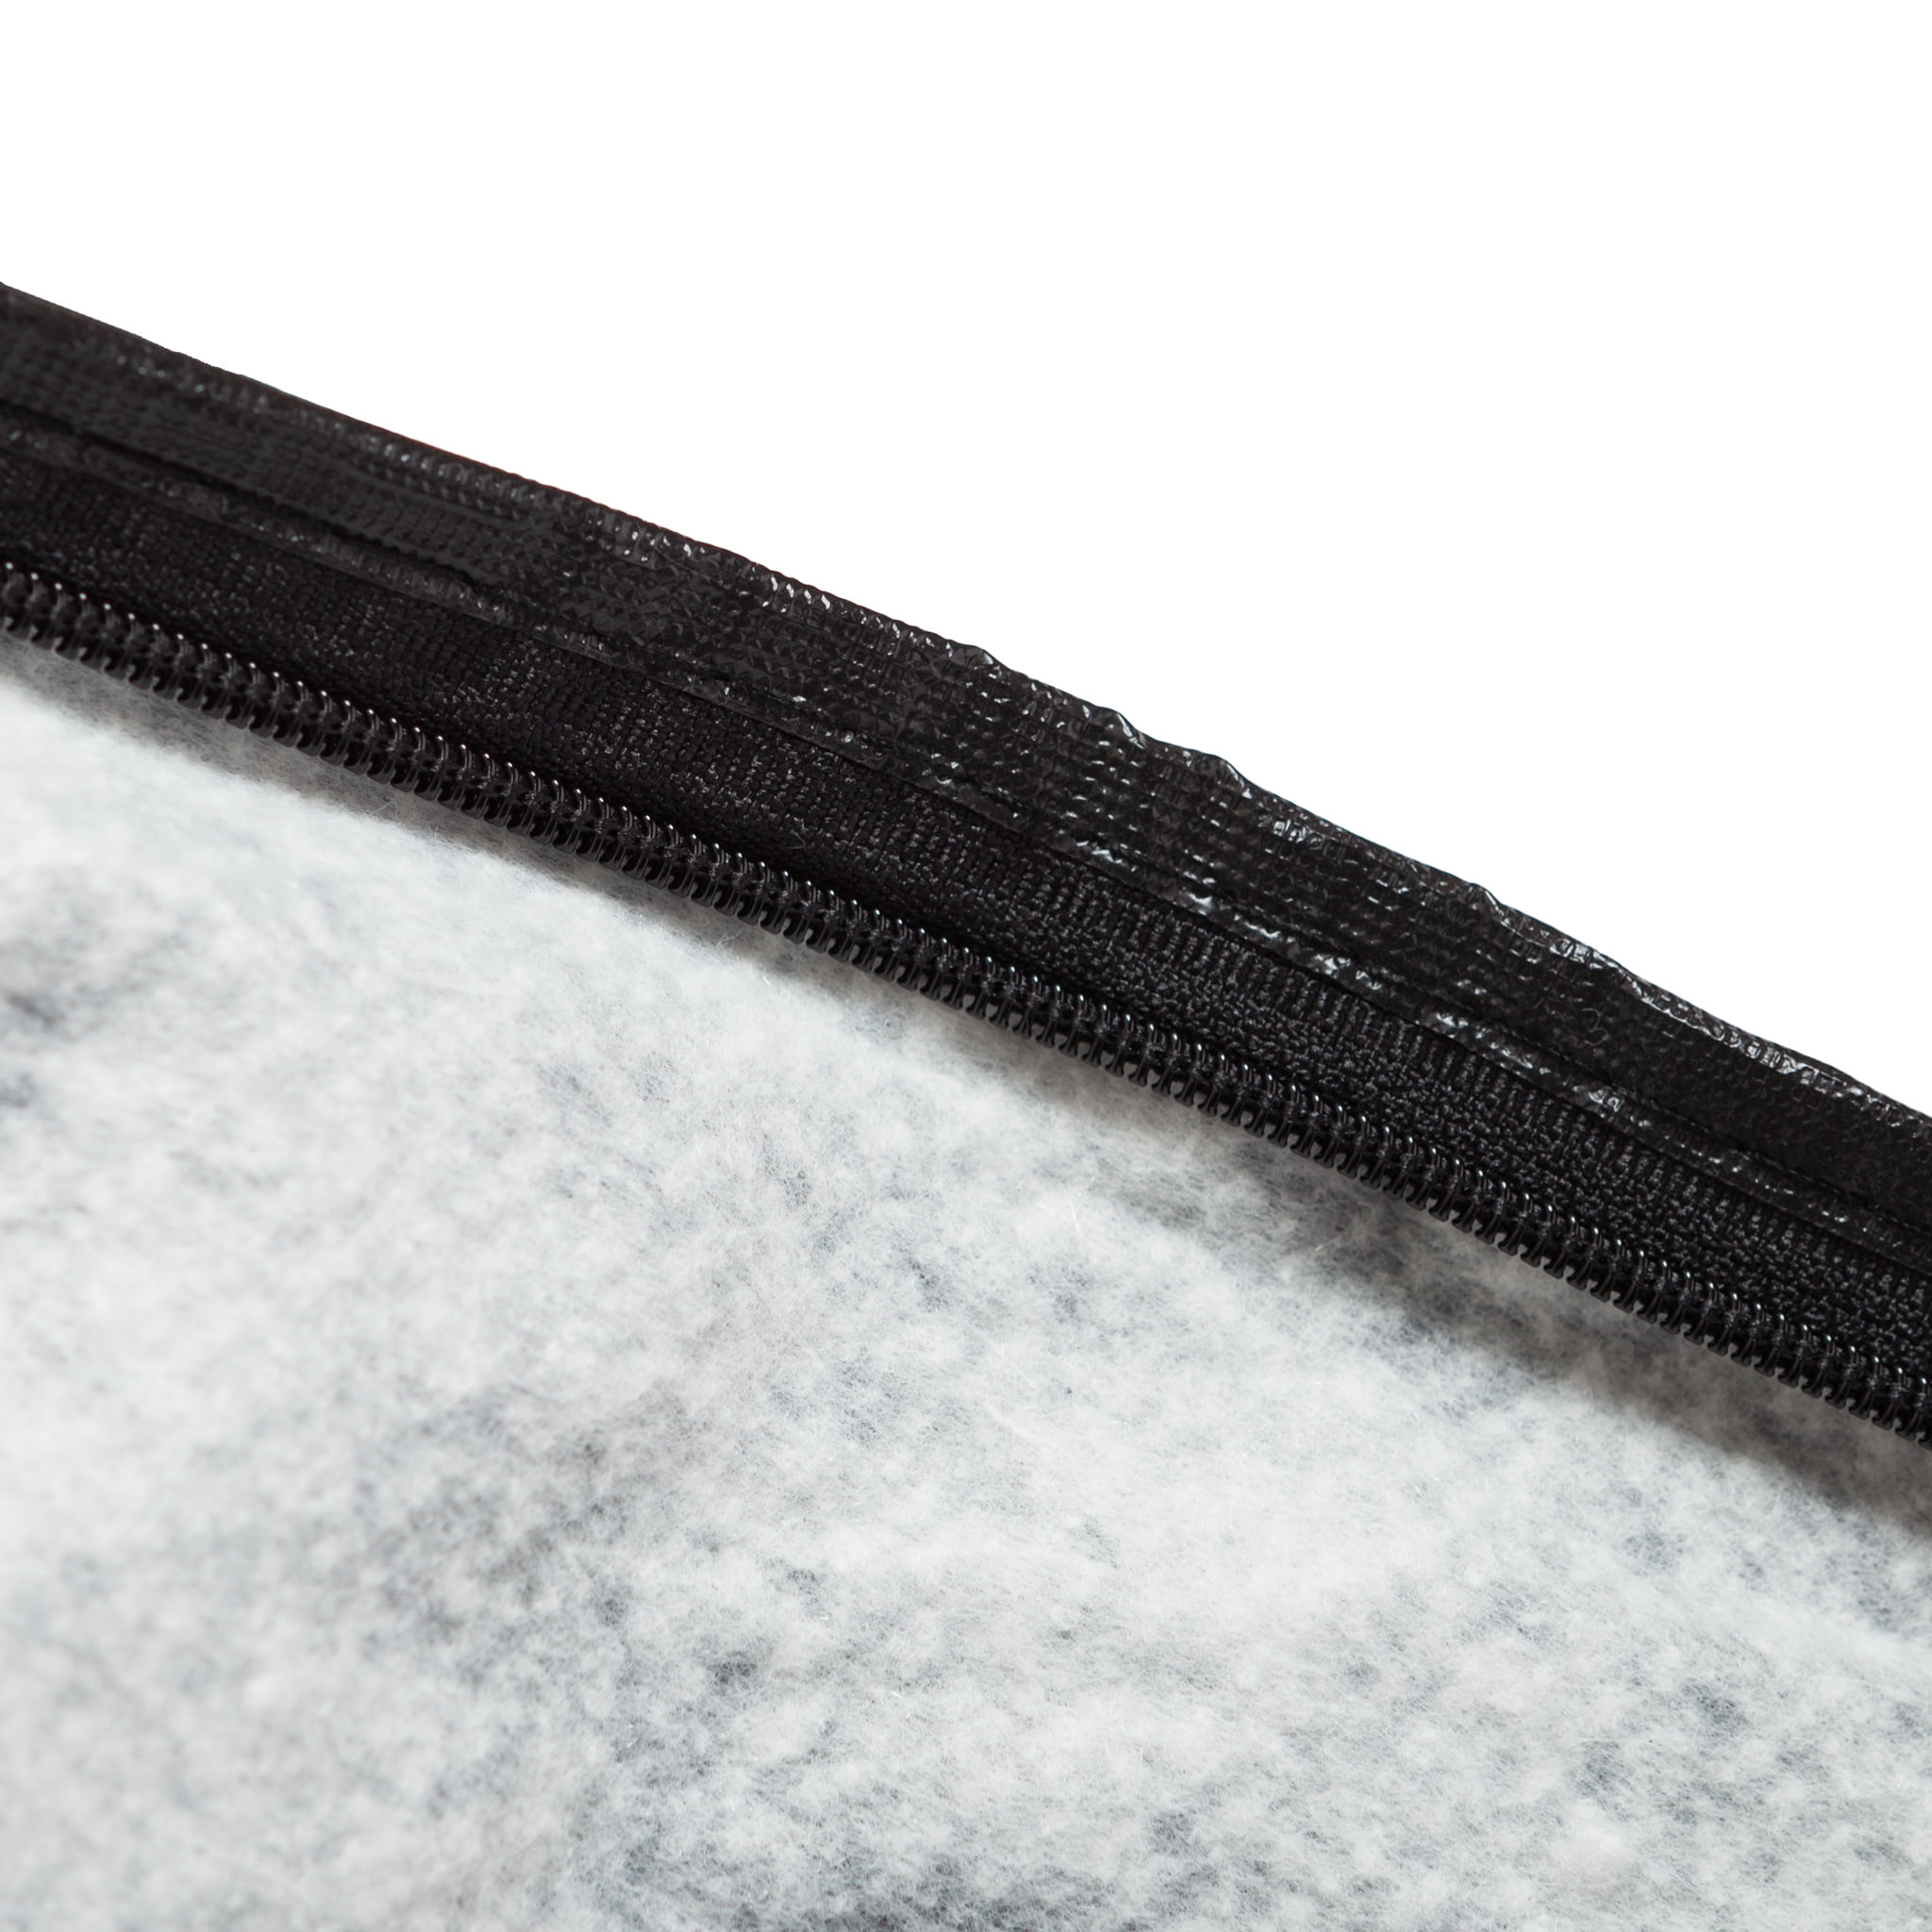 Fire Sense Full Length Pro Series Patio Heater Vinyl Cover Waterproof With Zipper and Fabric Ties Weather Resistant Heavy Duty 10 Gauge Felt Lined Black Vinyl 